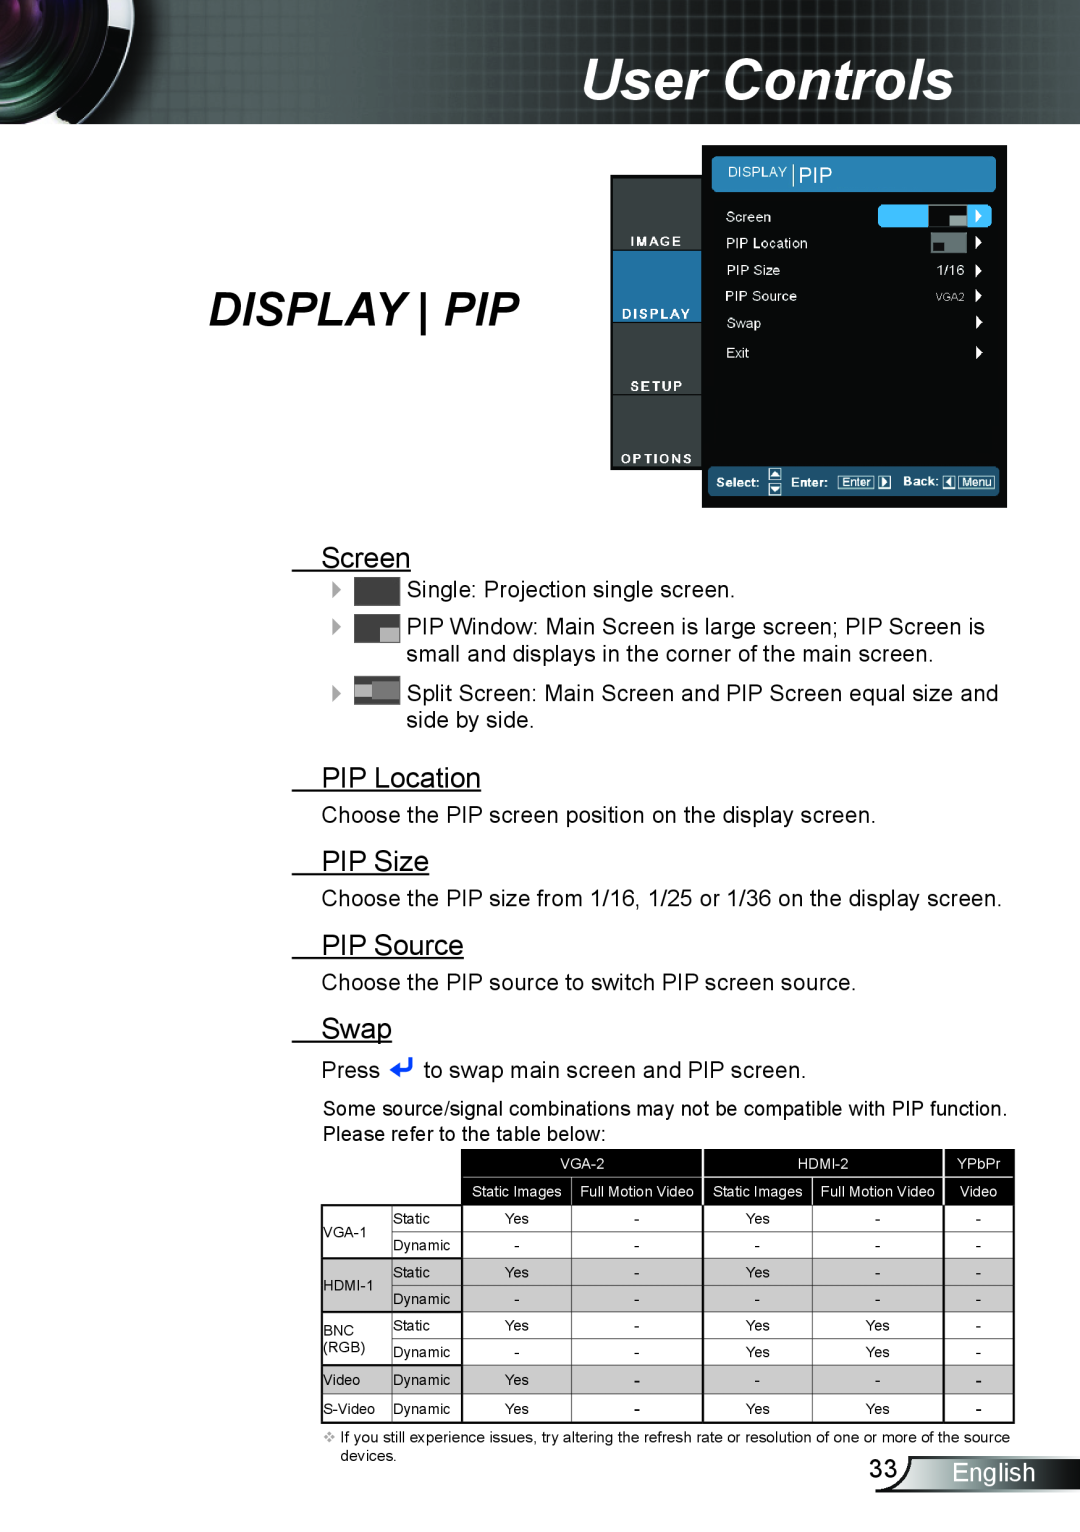 Optoma Technology TH7500NL manual Display Pip, Screen, PIP Location, PIP Size, PIP Source, Swap, User Controls, English 